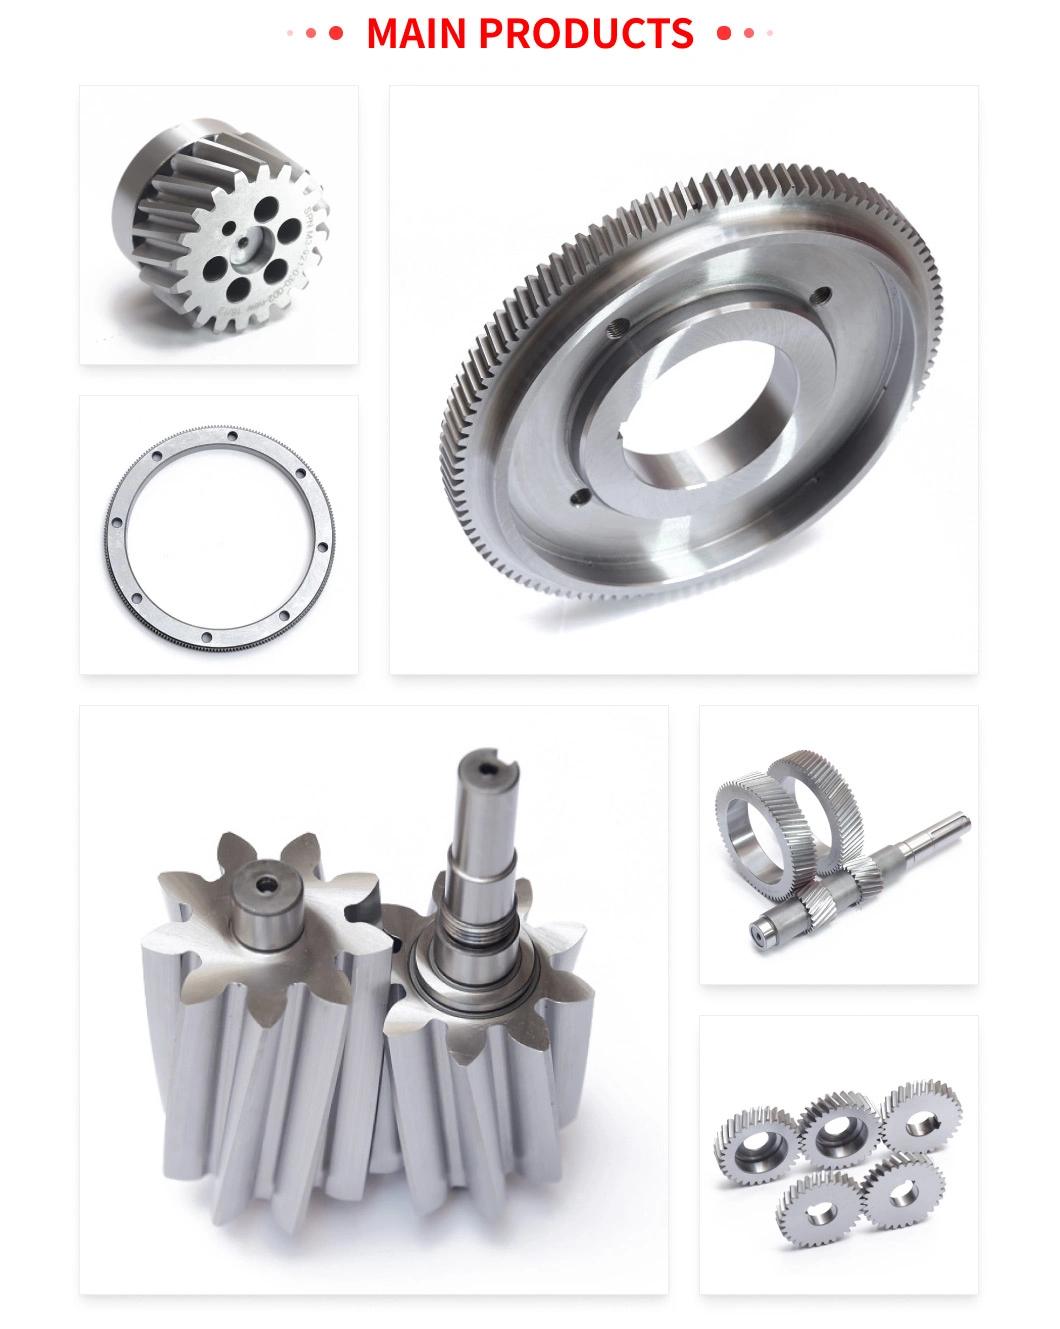 Lubricating Oil Cut OEM Cylindrical Wheel Shaft Transmission Gear with High Quality